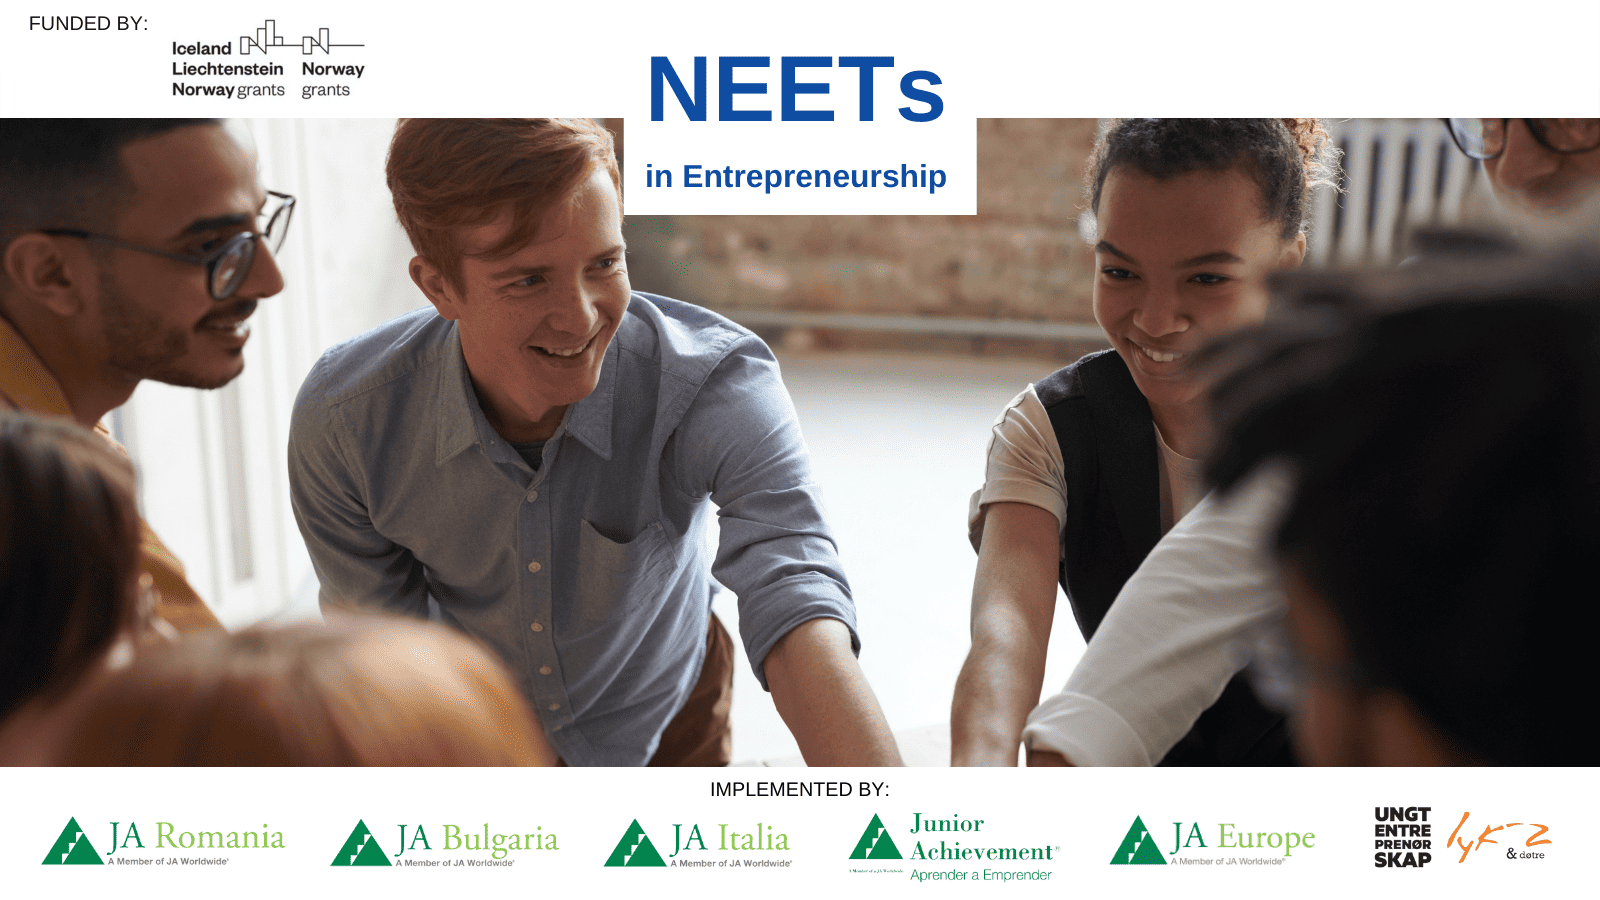 Empowering YOUth through Entrepreneurship!